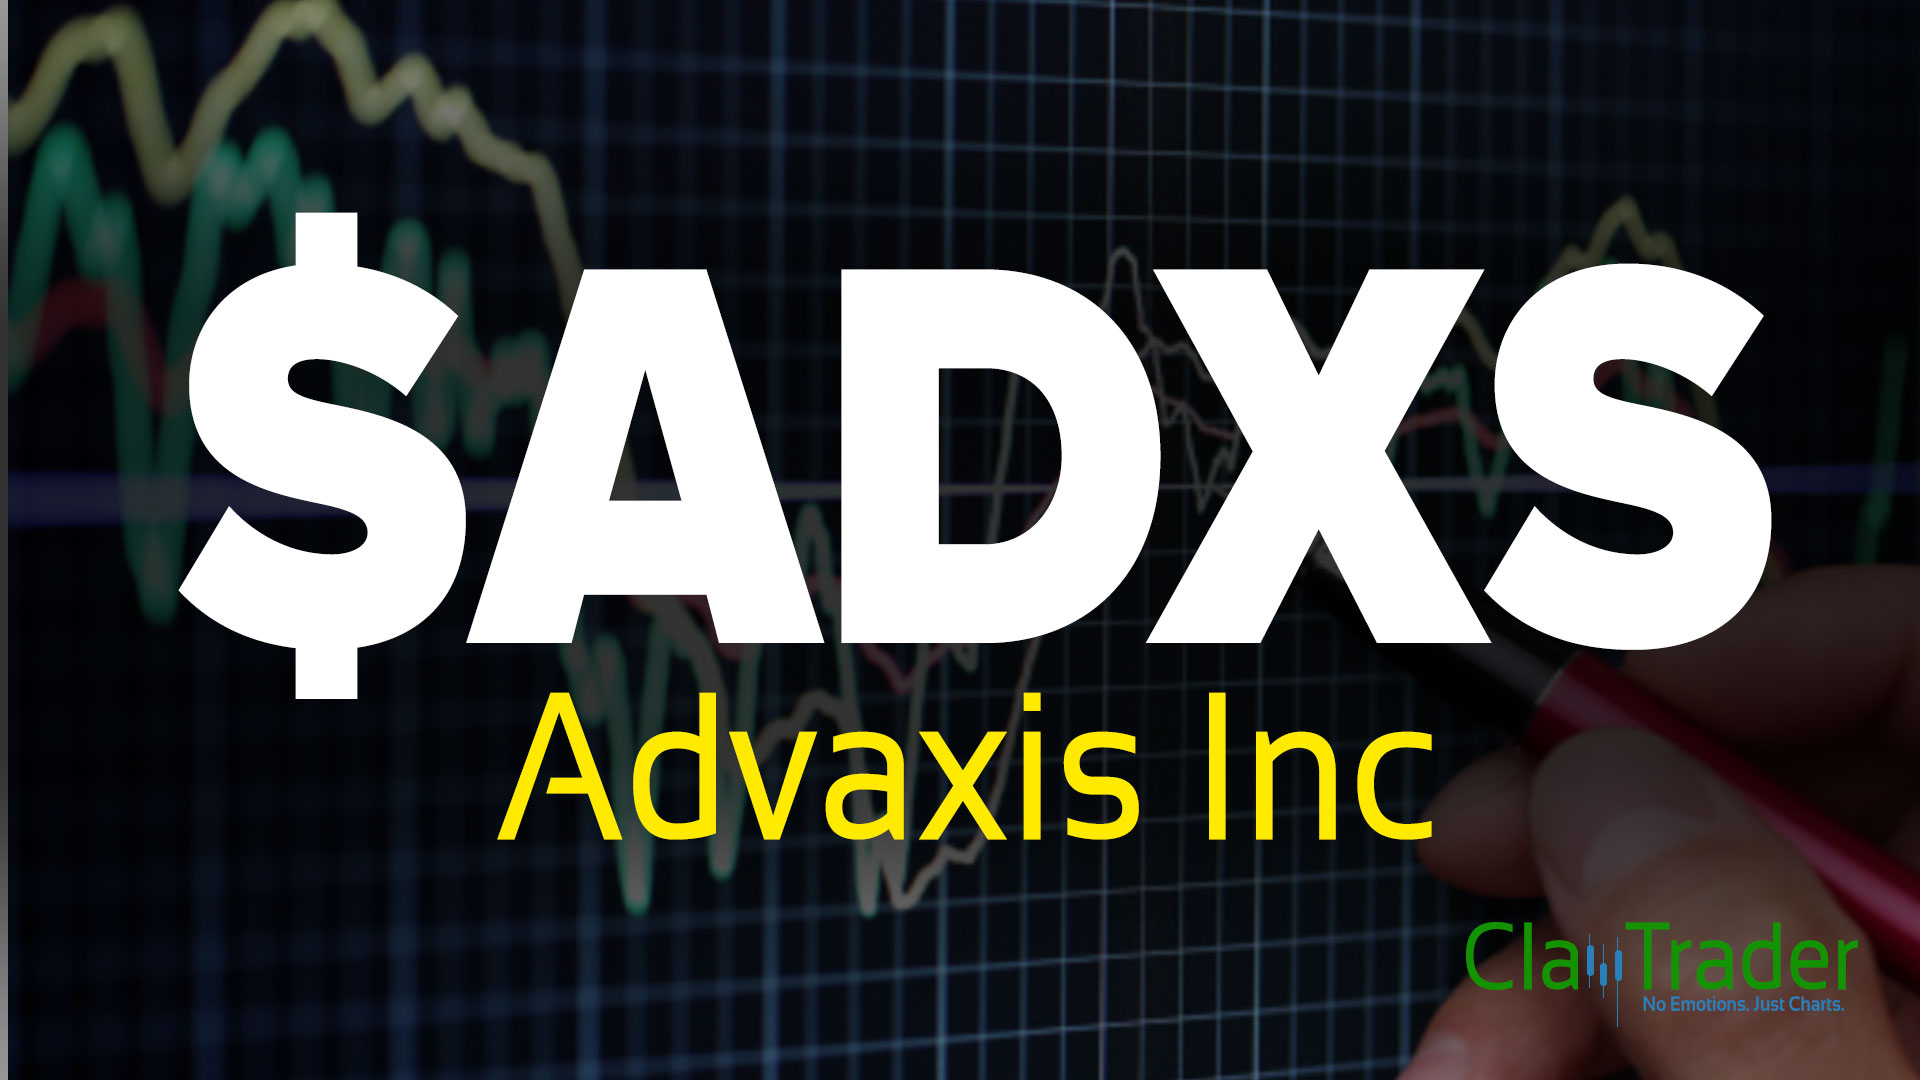 Adxs Stock Chart